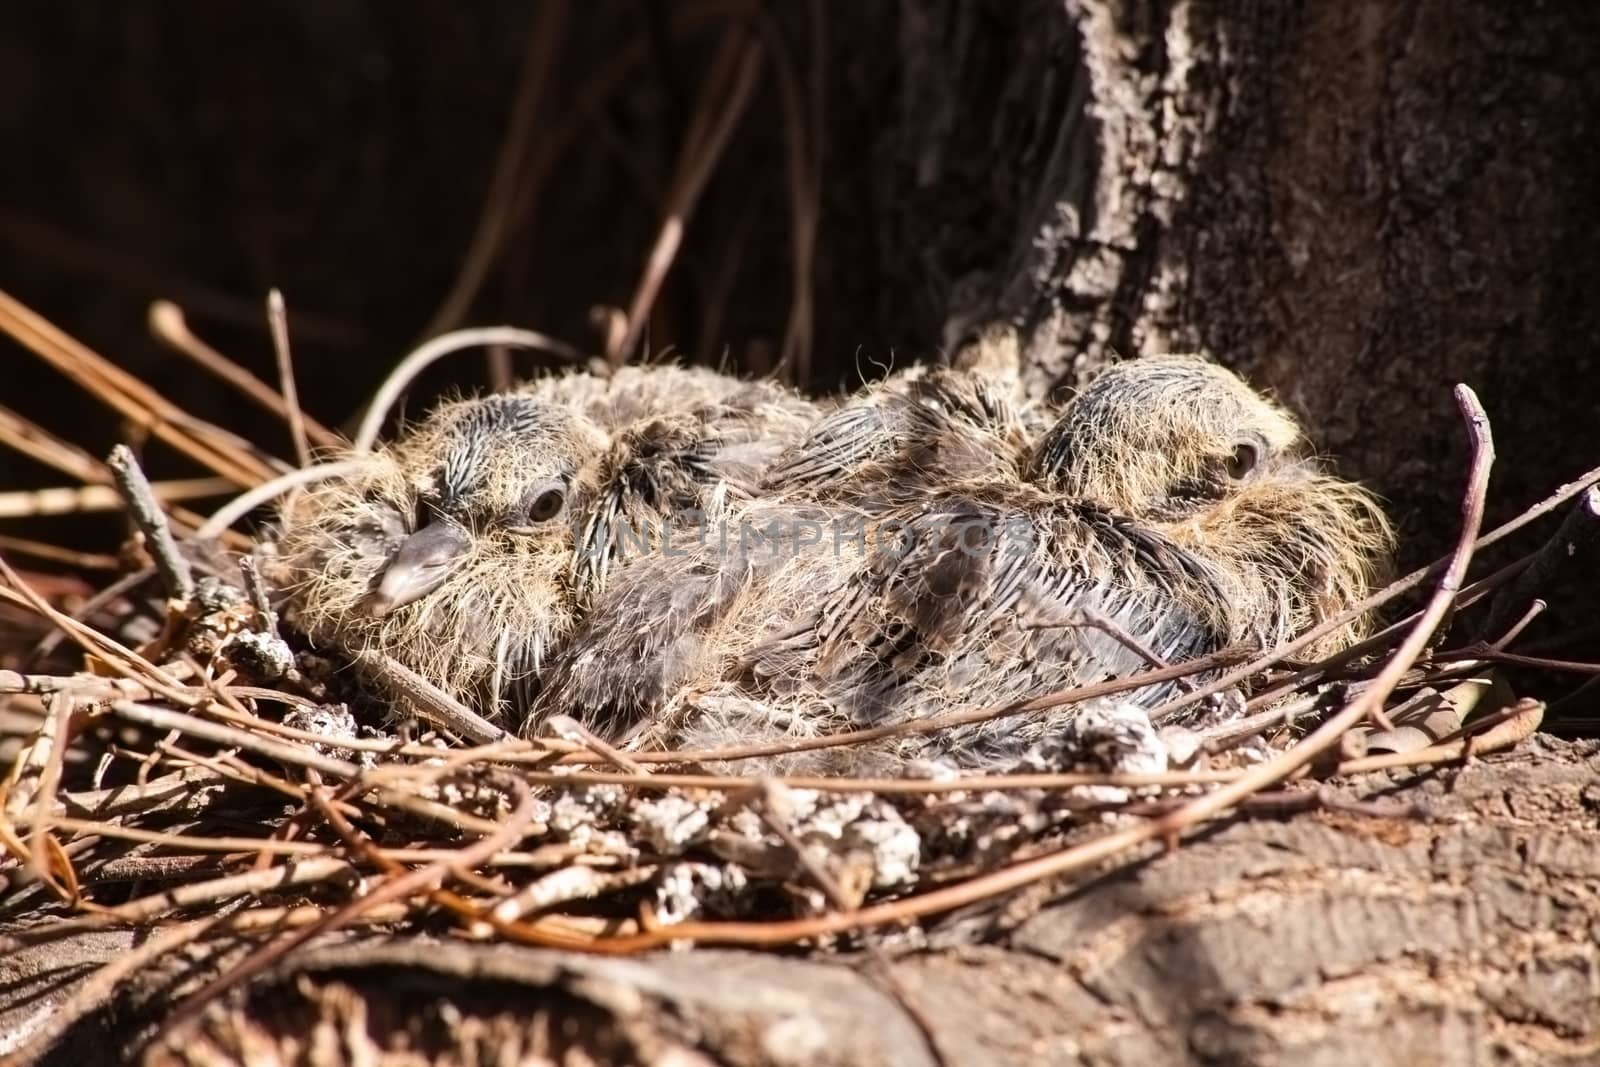 Baby Doves in Nest by kobus_peche